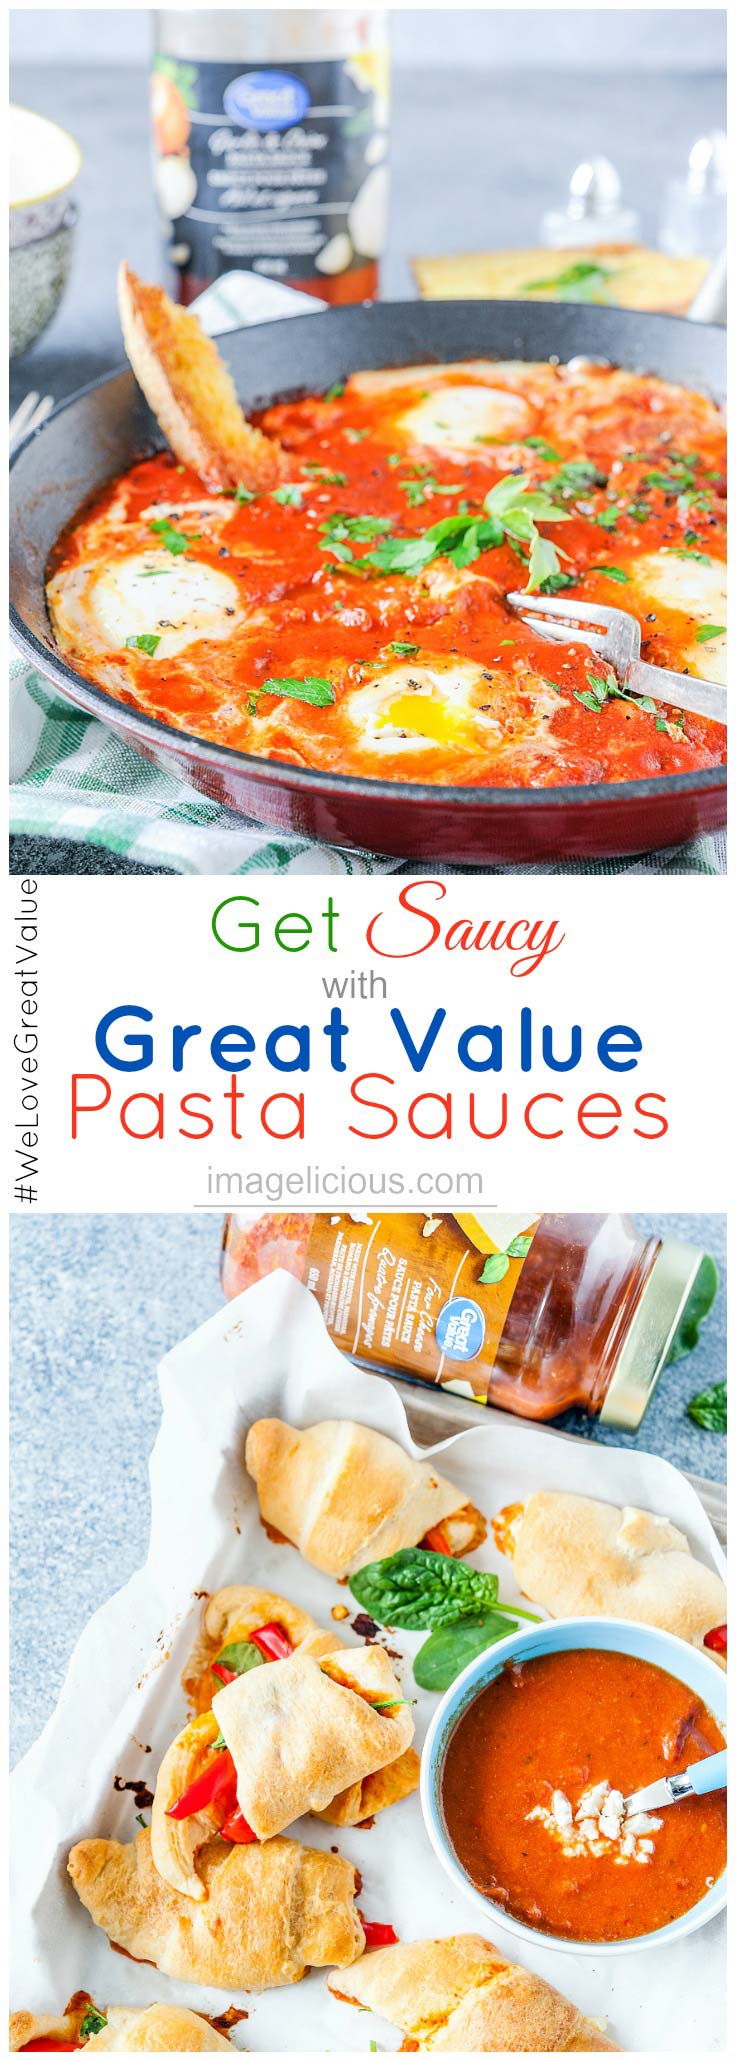 Great Value Pasta Sauce | Great Value | Walmart Canada | Pasta Sauce | #WeLoveGreatValue | #ad | Imagelicious